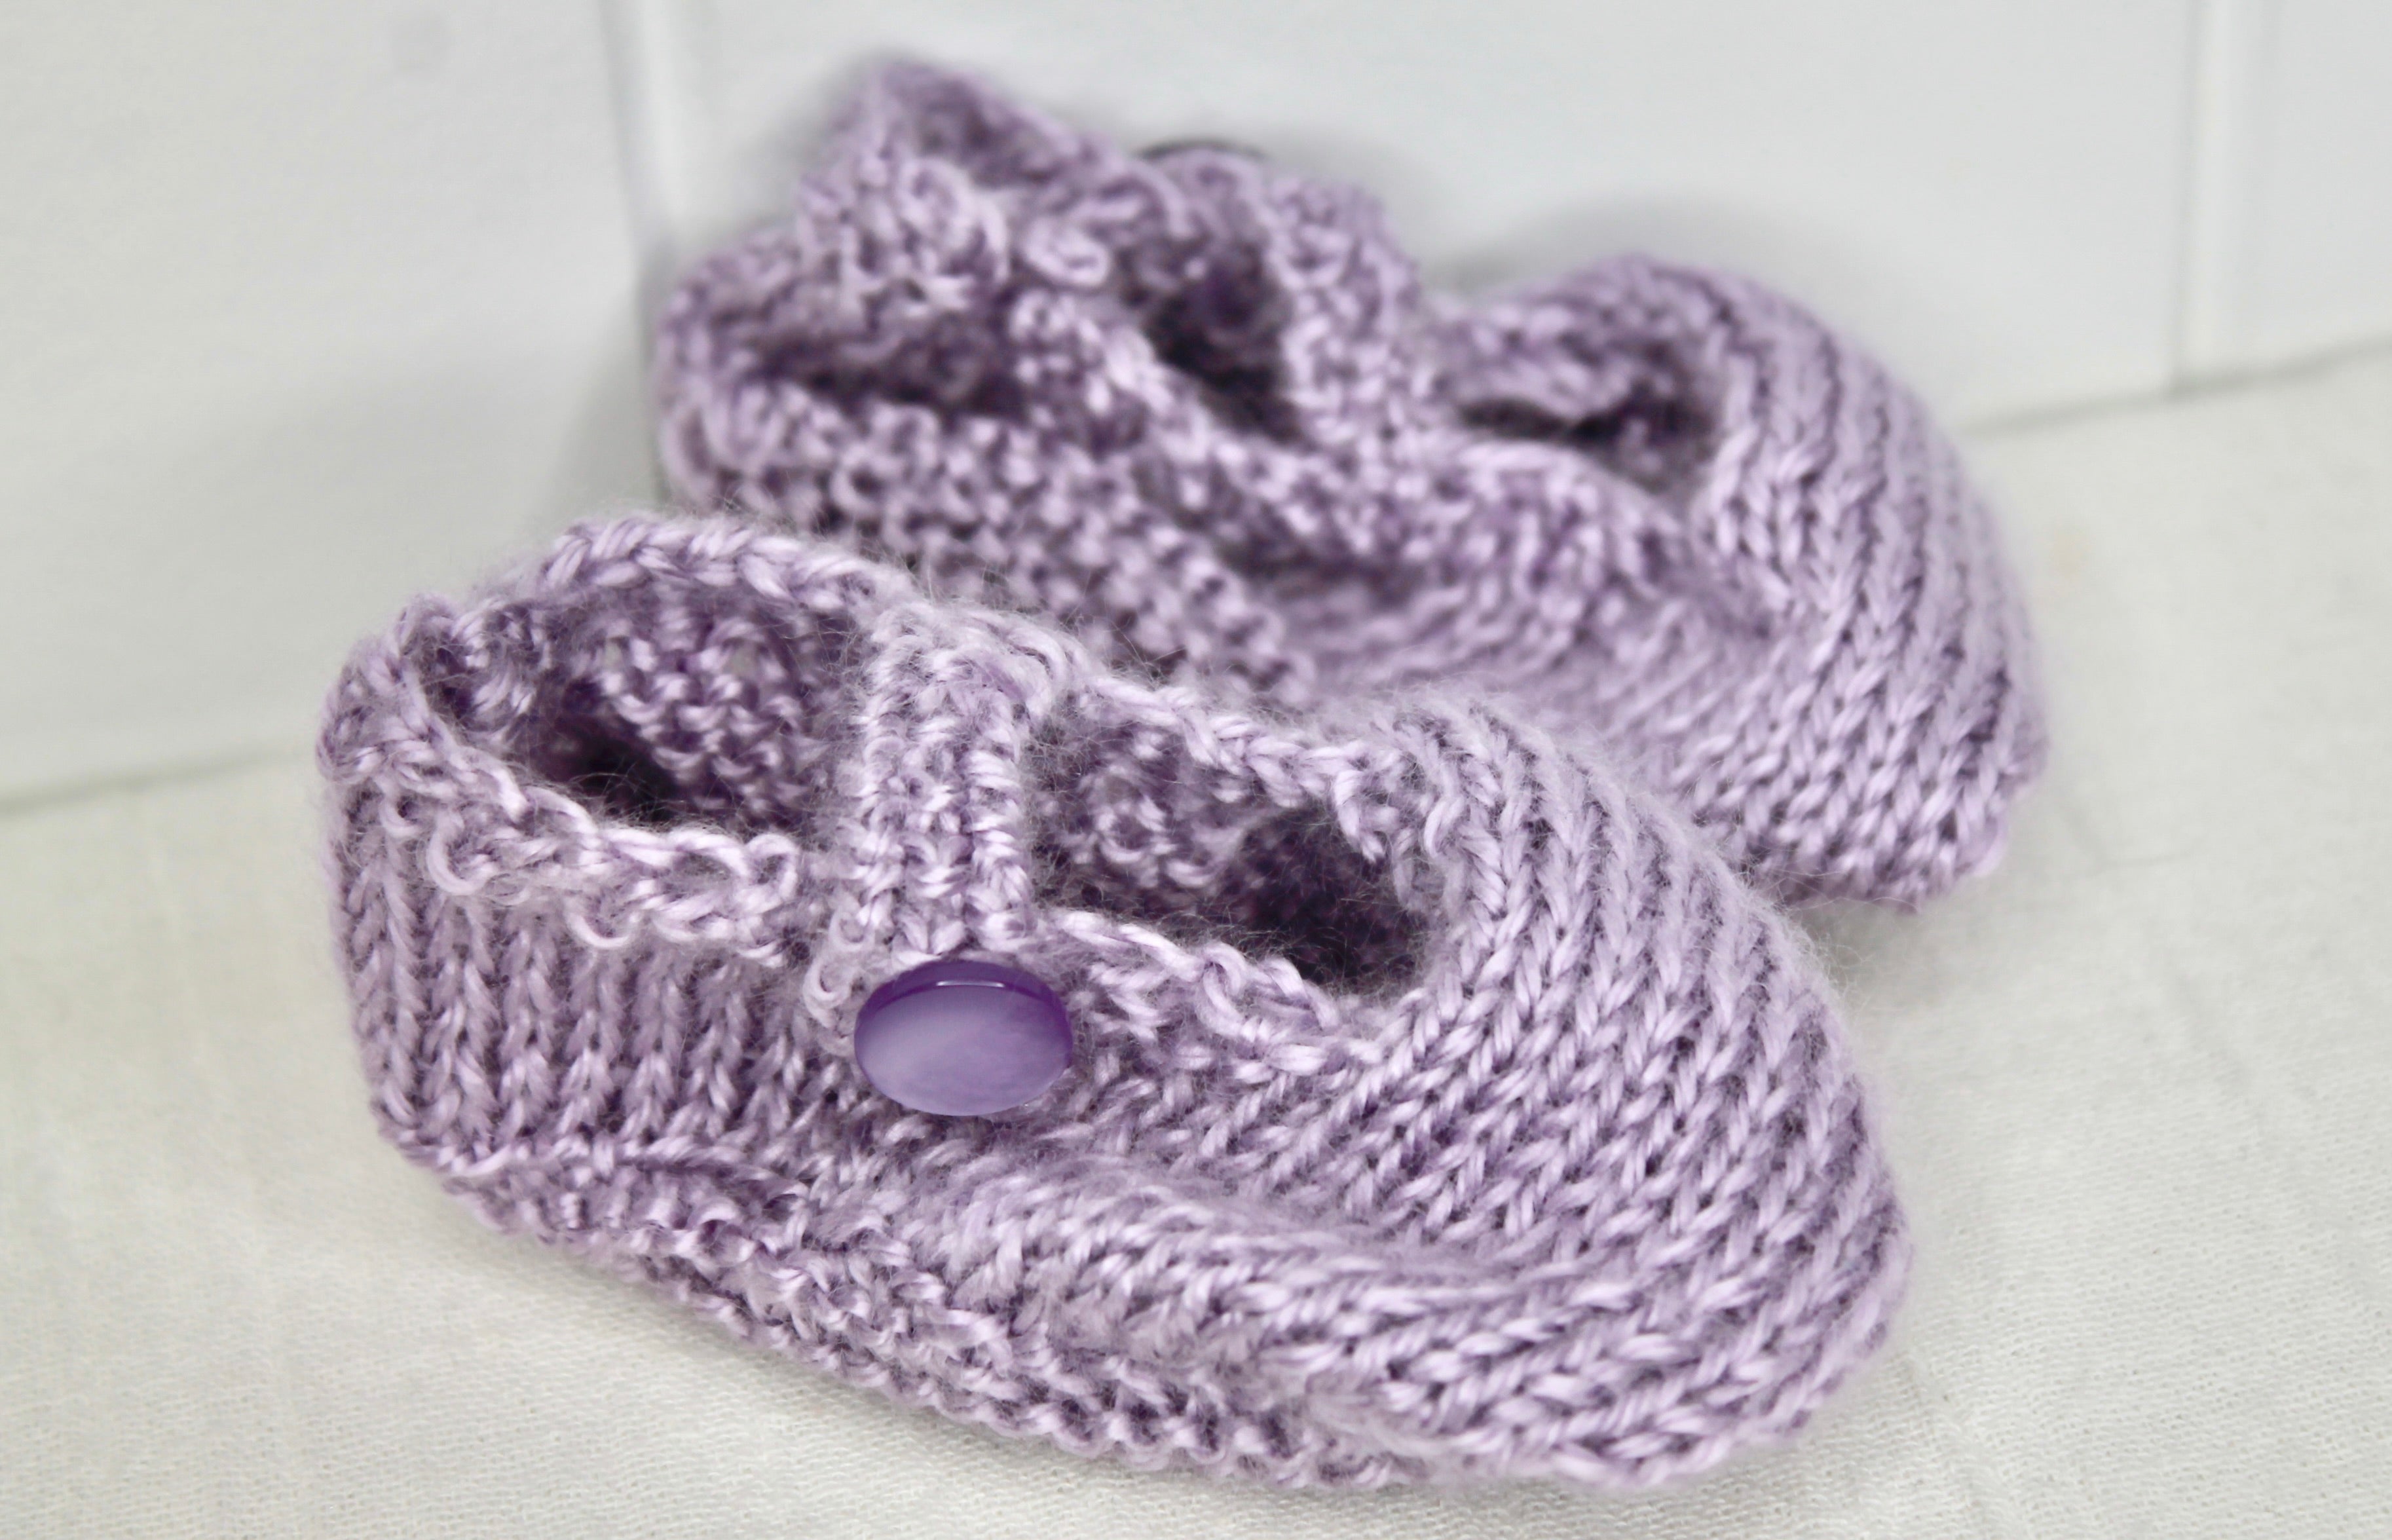 Penelope Lavender 0-3 Month Handknitted Set